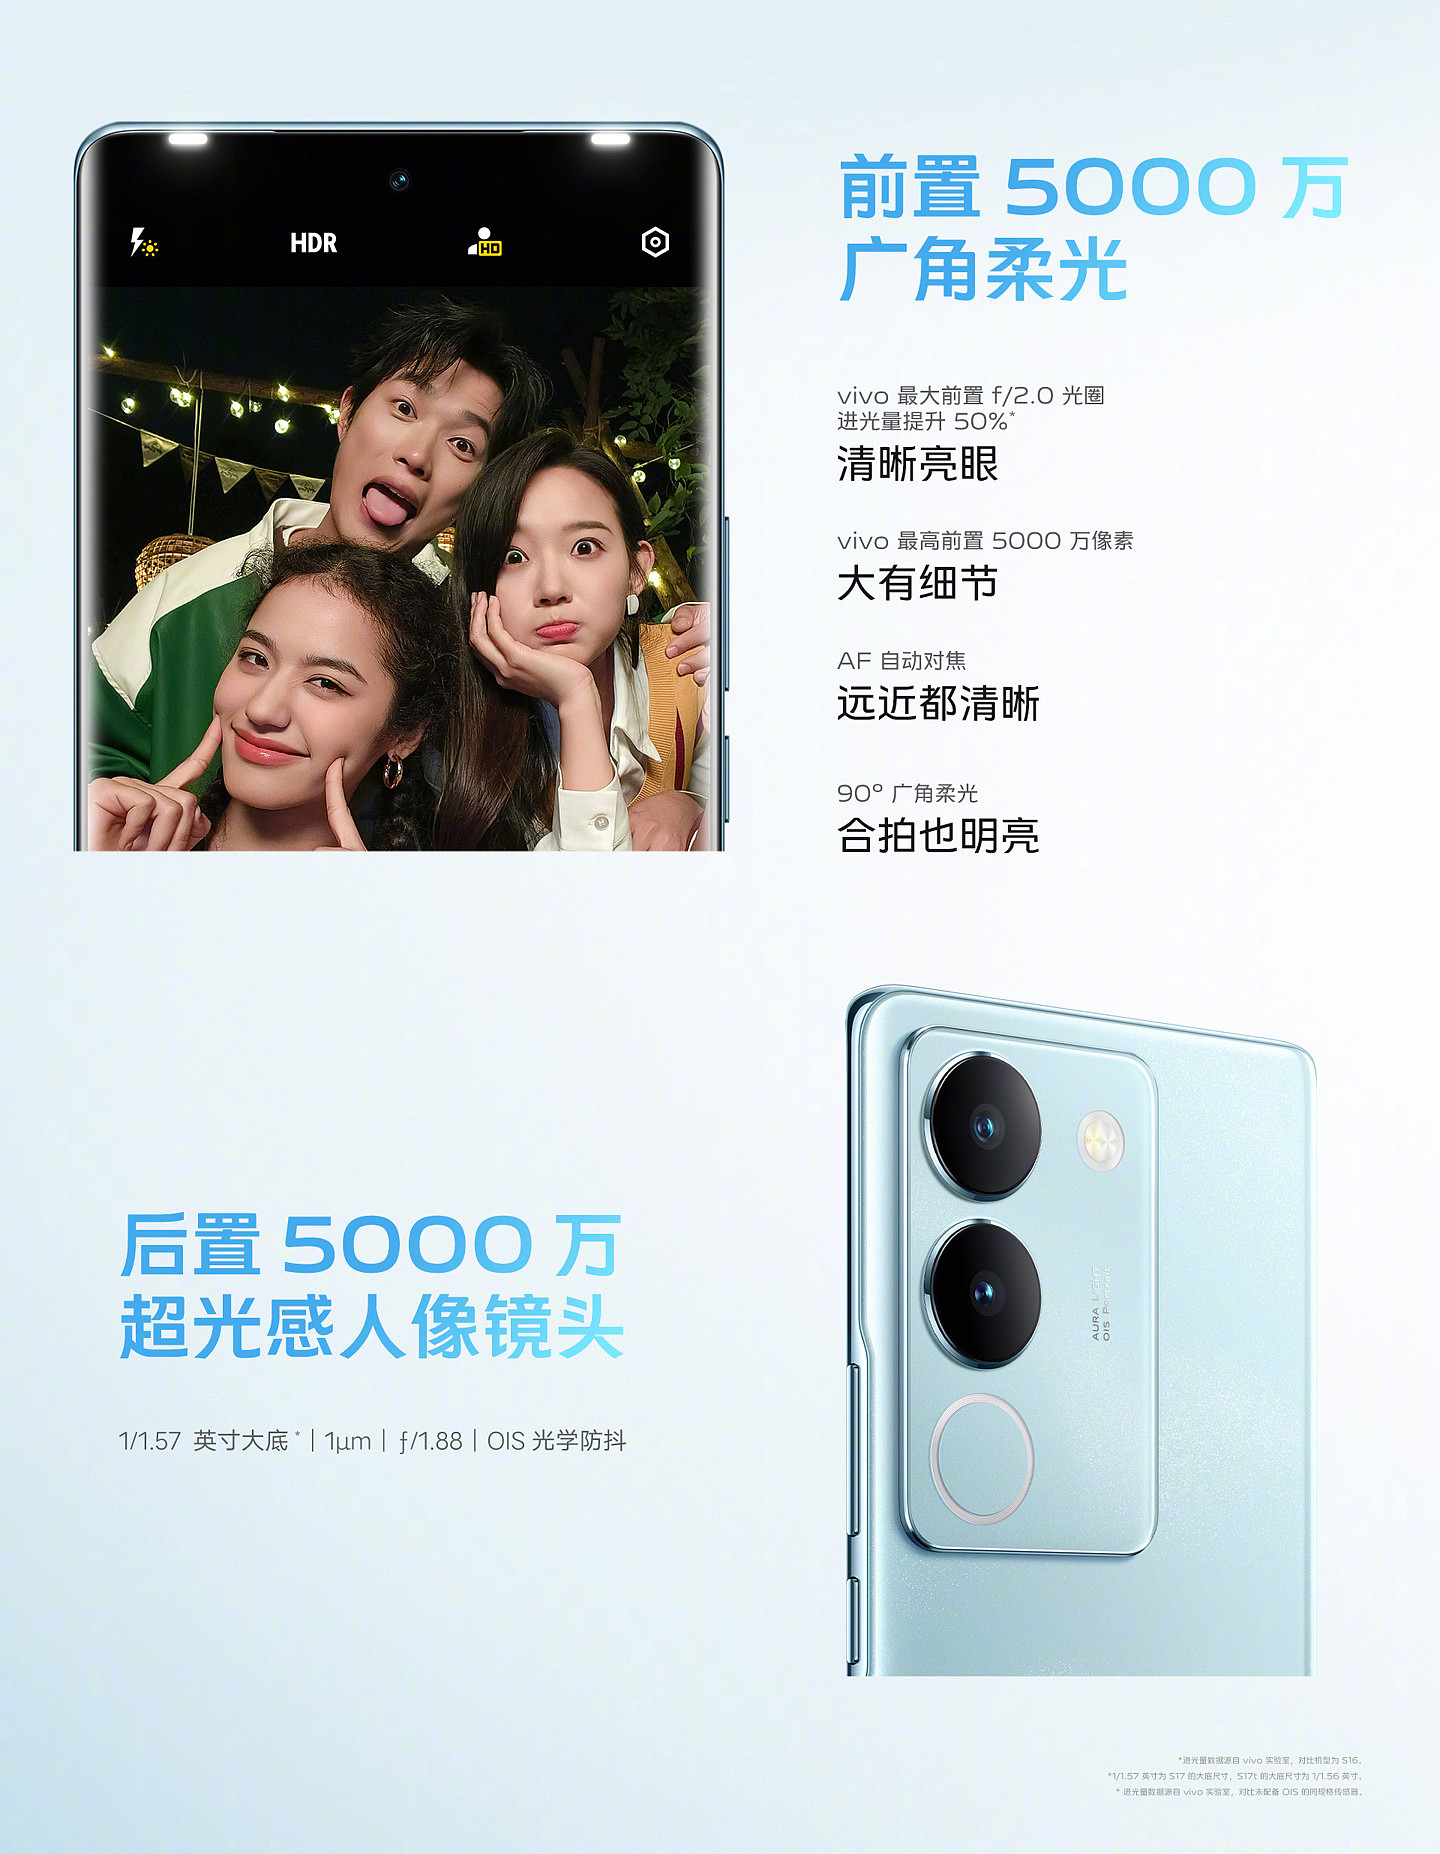 vivo S17 / S17t / S17 Pro 手机发布：主打人像摄影，售价 2499 元起 - 6